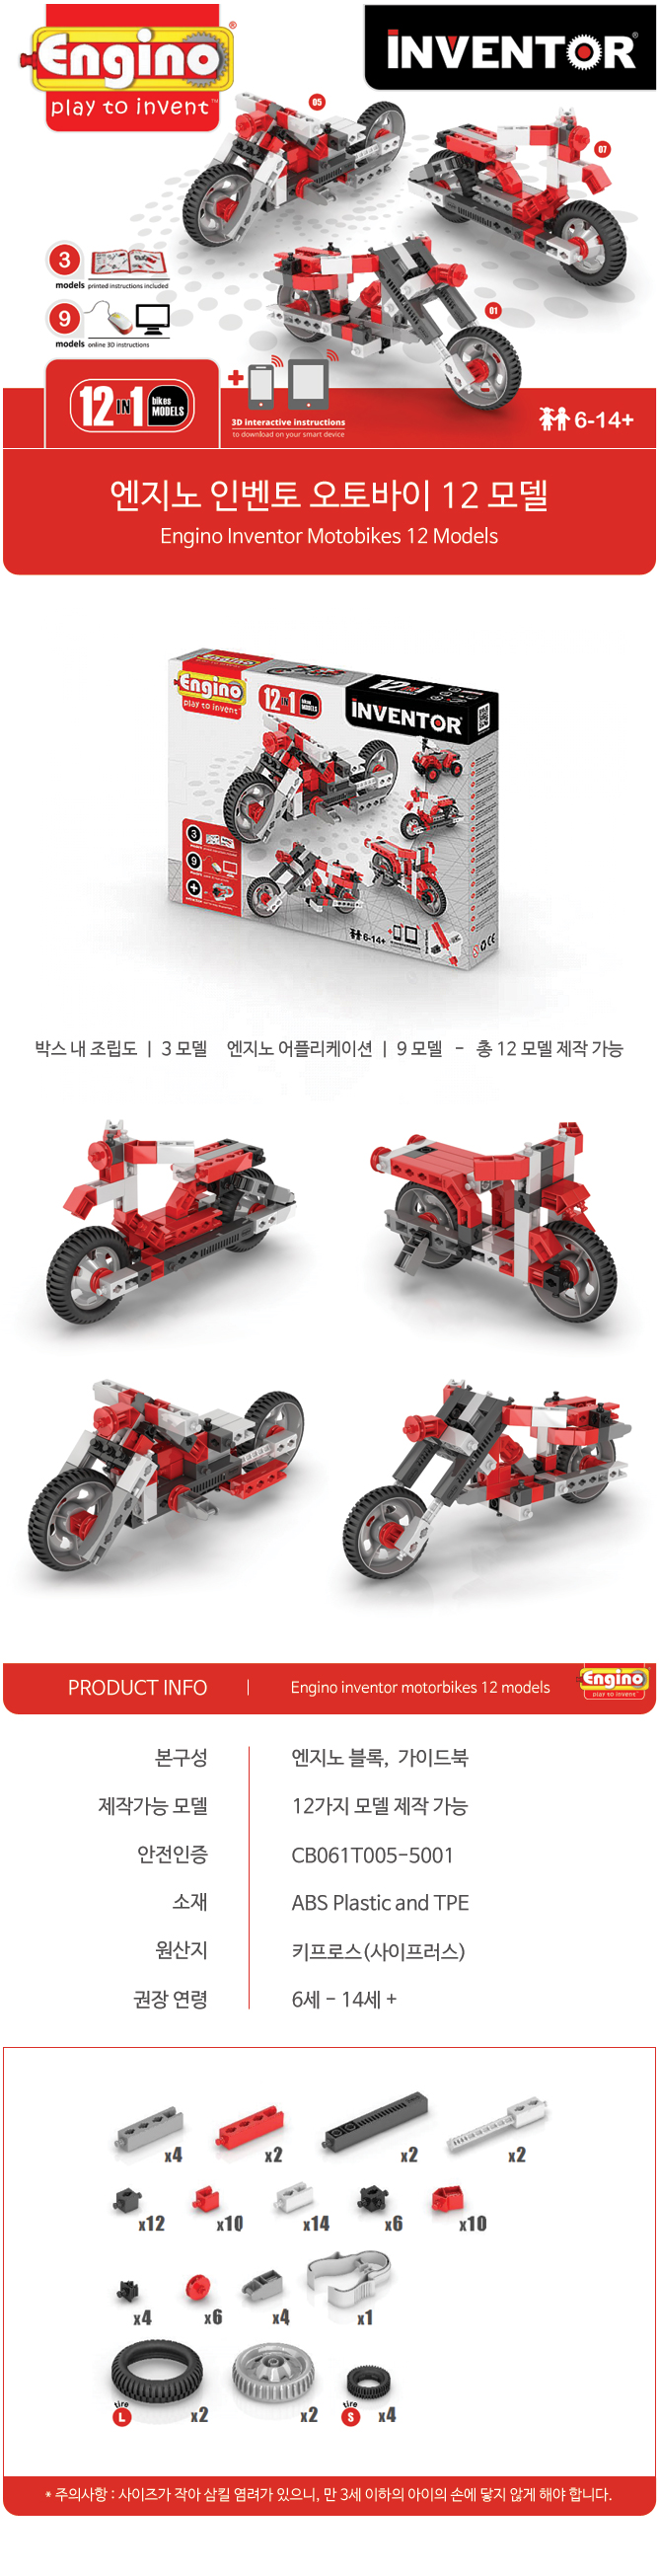 engino_motorbikes_12models_product_detail_210710.jpg